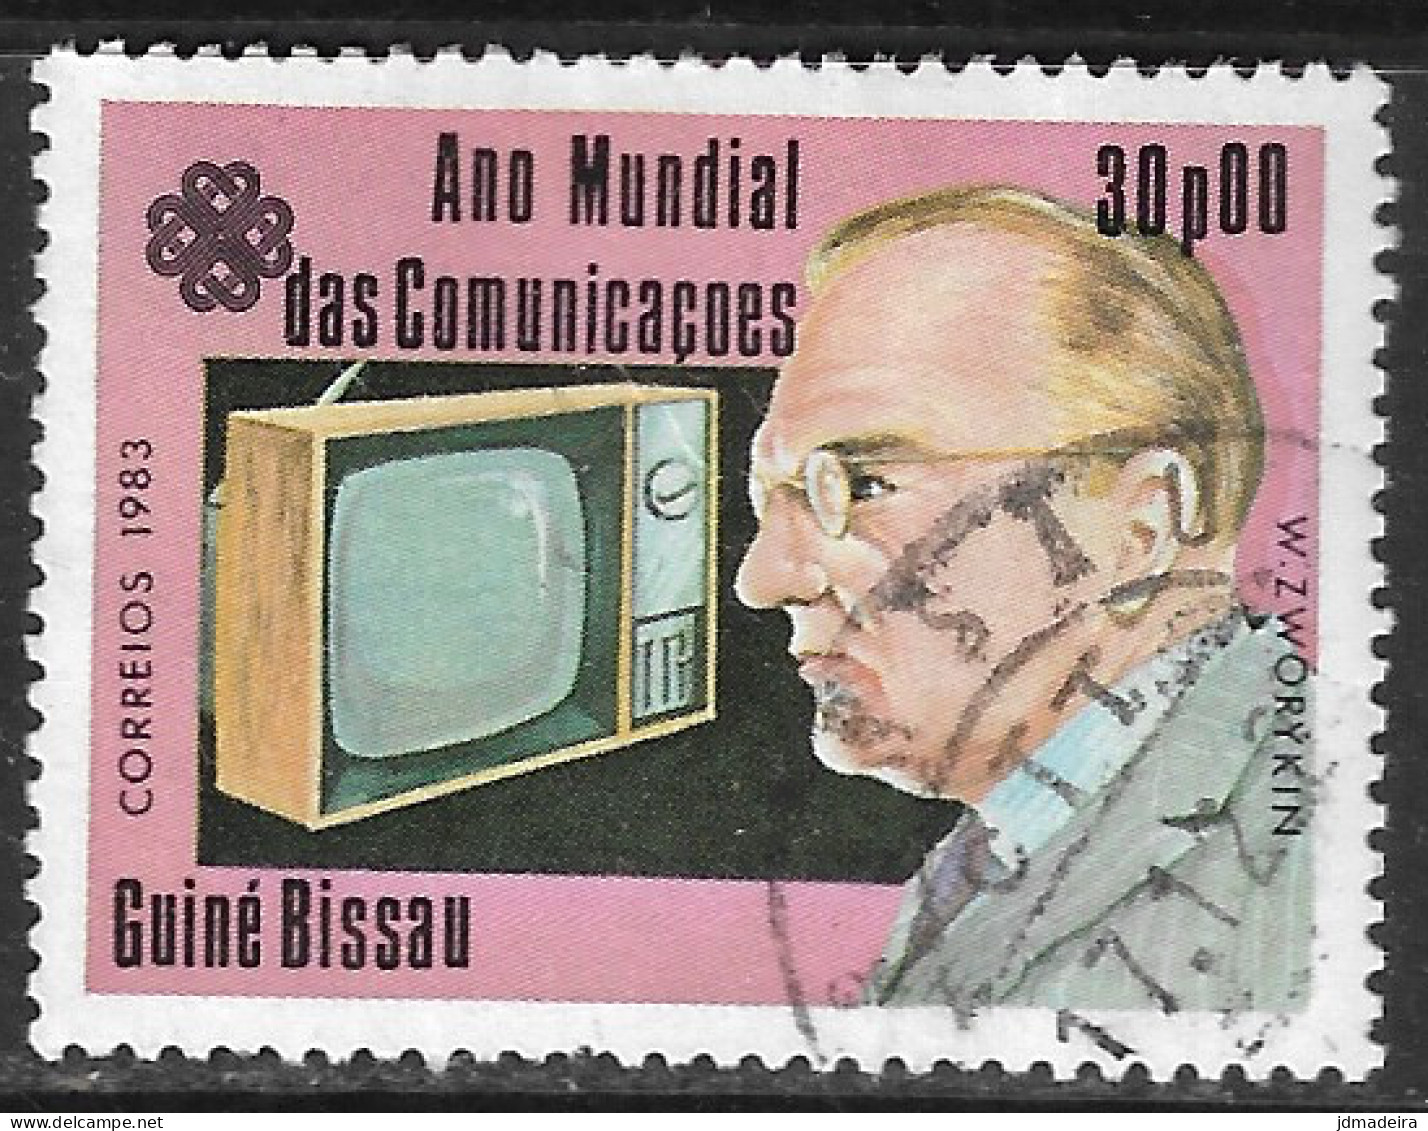 GUINE BISSAU – 1983 Telecoms Day 30P00 Used Stamp - Guinea-Bissau